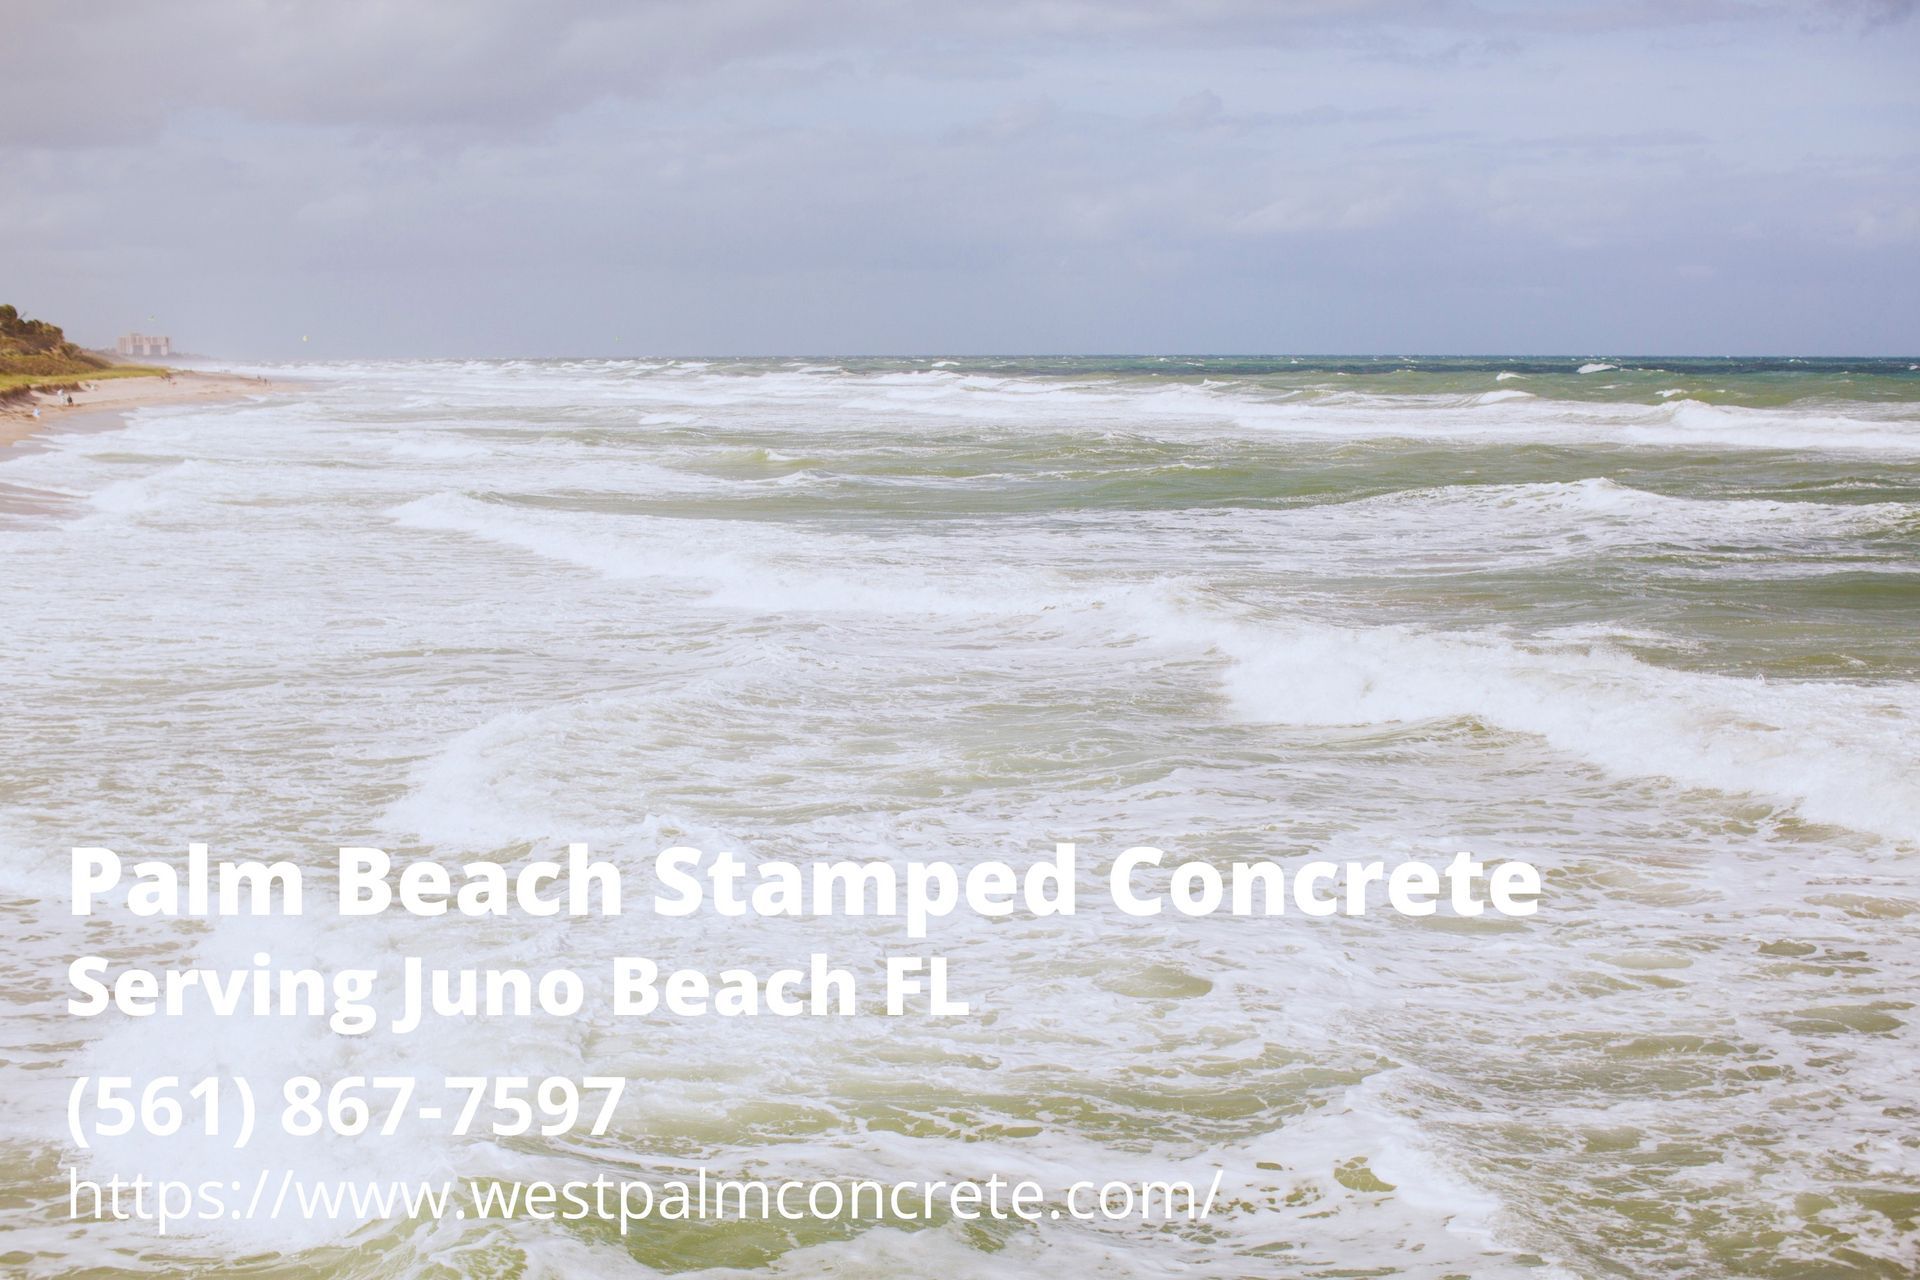 Juno Beach. Text by Palm Beach Stamped Concrete - a decorative concrete company serving Juno Beach, FL